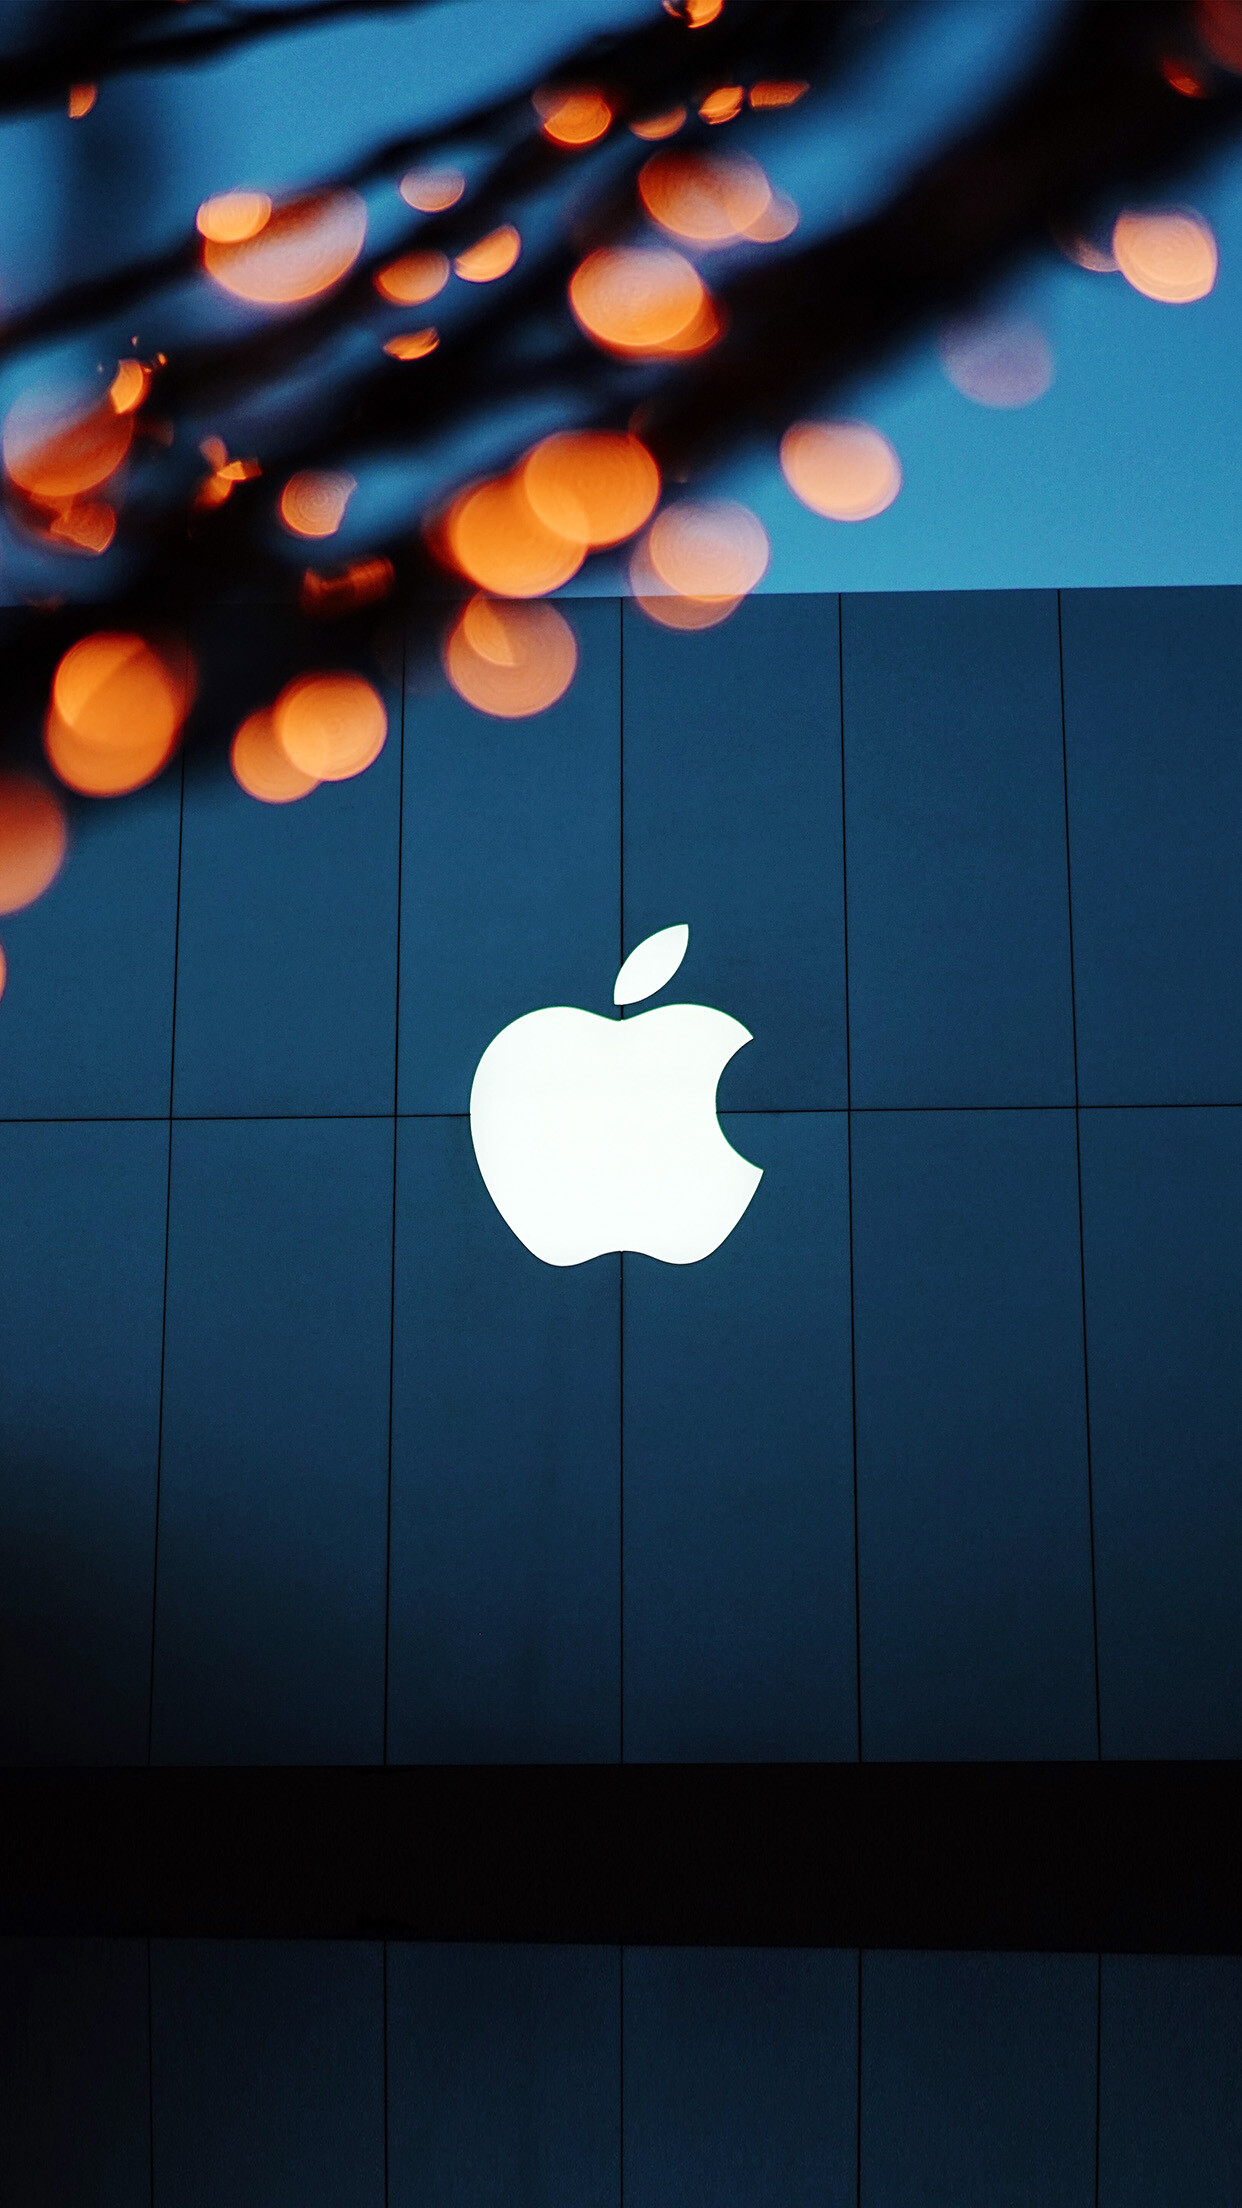 Apple Logo: An American computer and consumer electronics company, Steve Jobs. 1250x2210 HD Wallpaper.